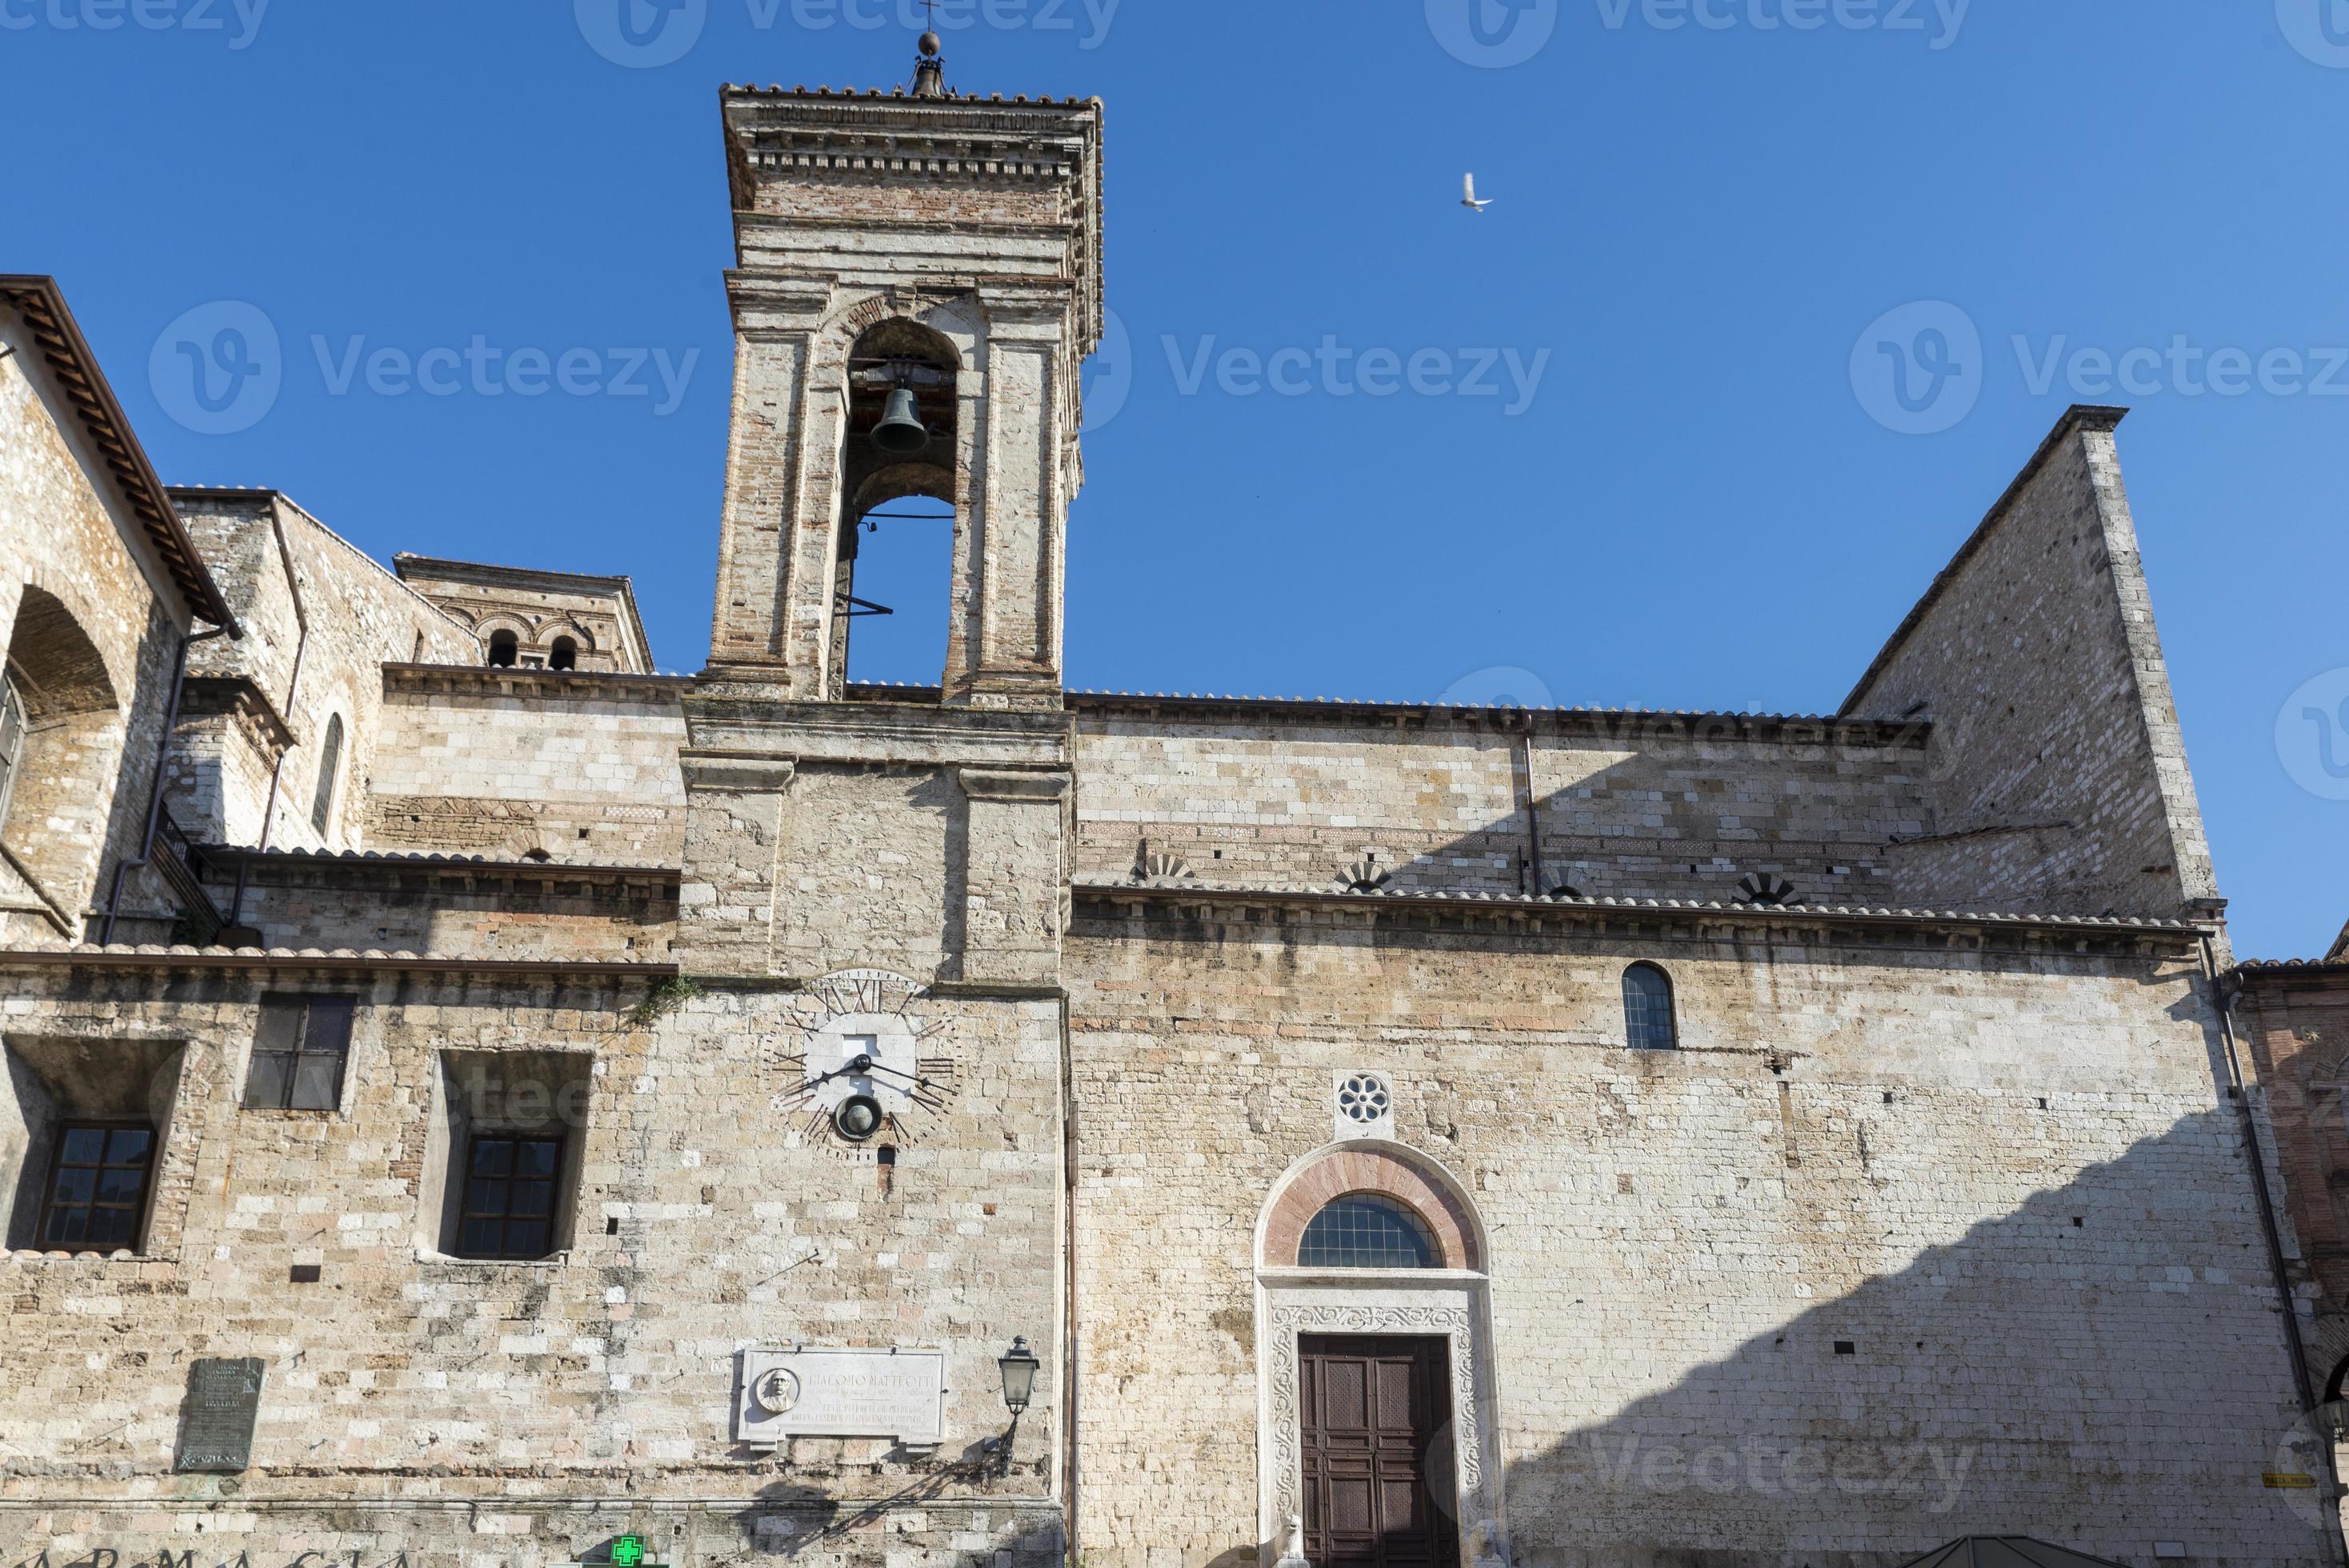 catedral de san givenale em narni, itália, 2020 foto